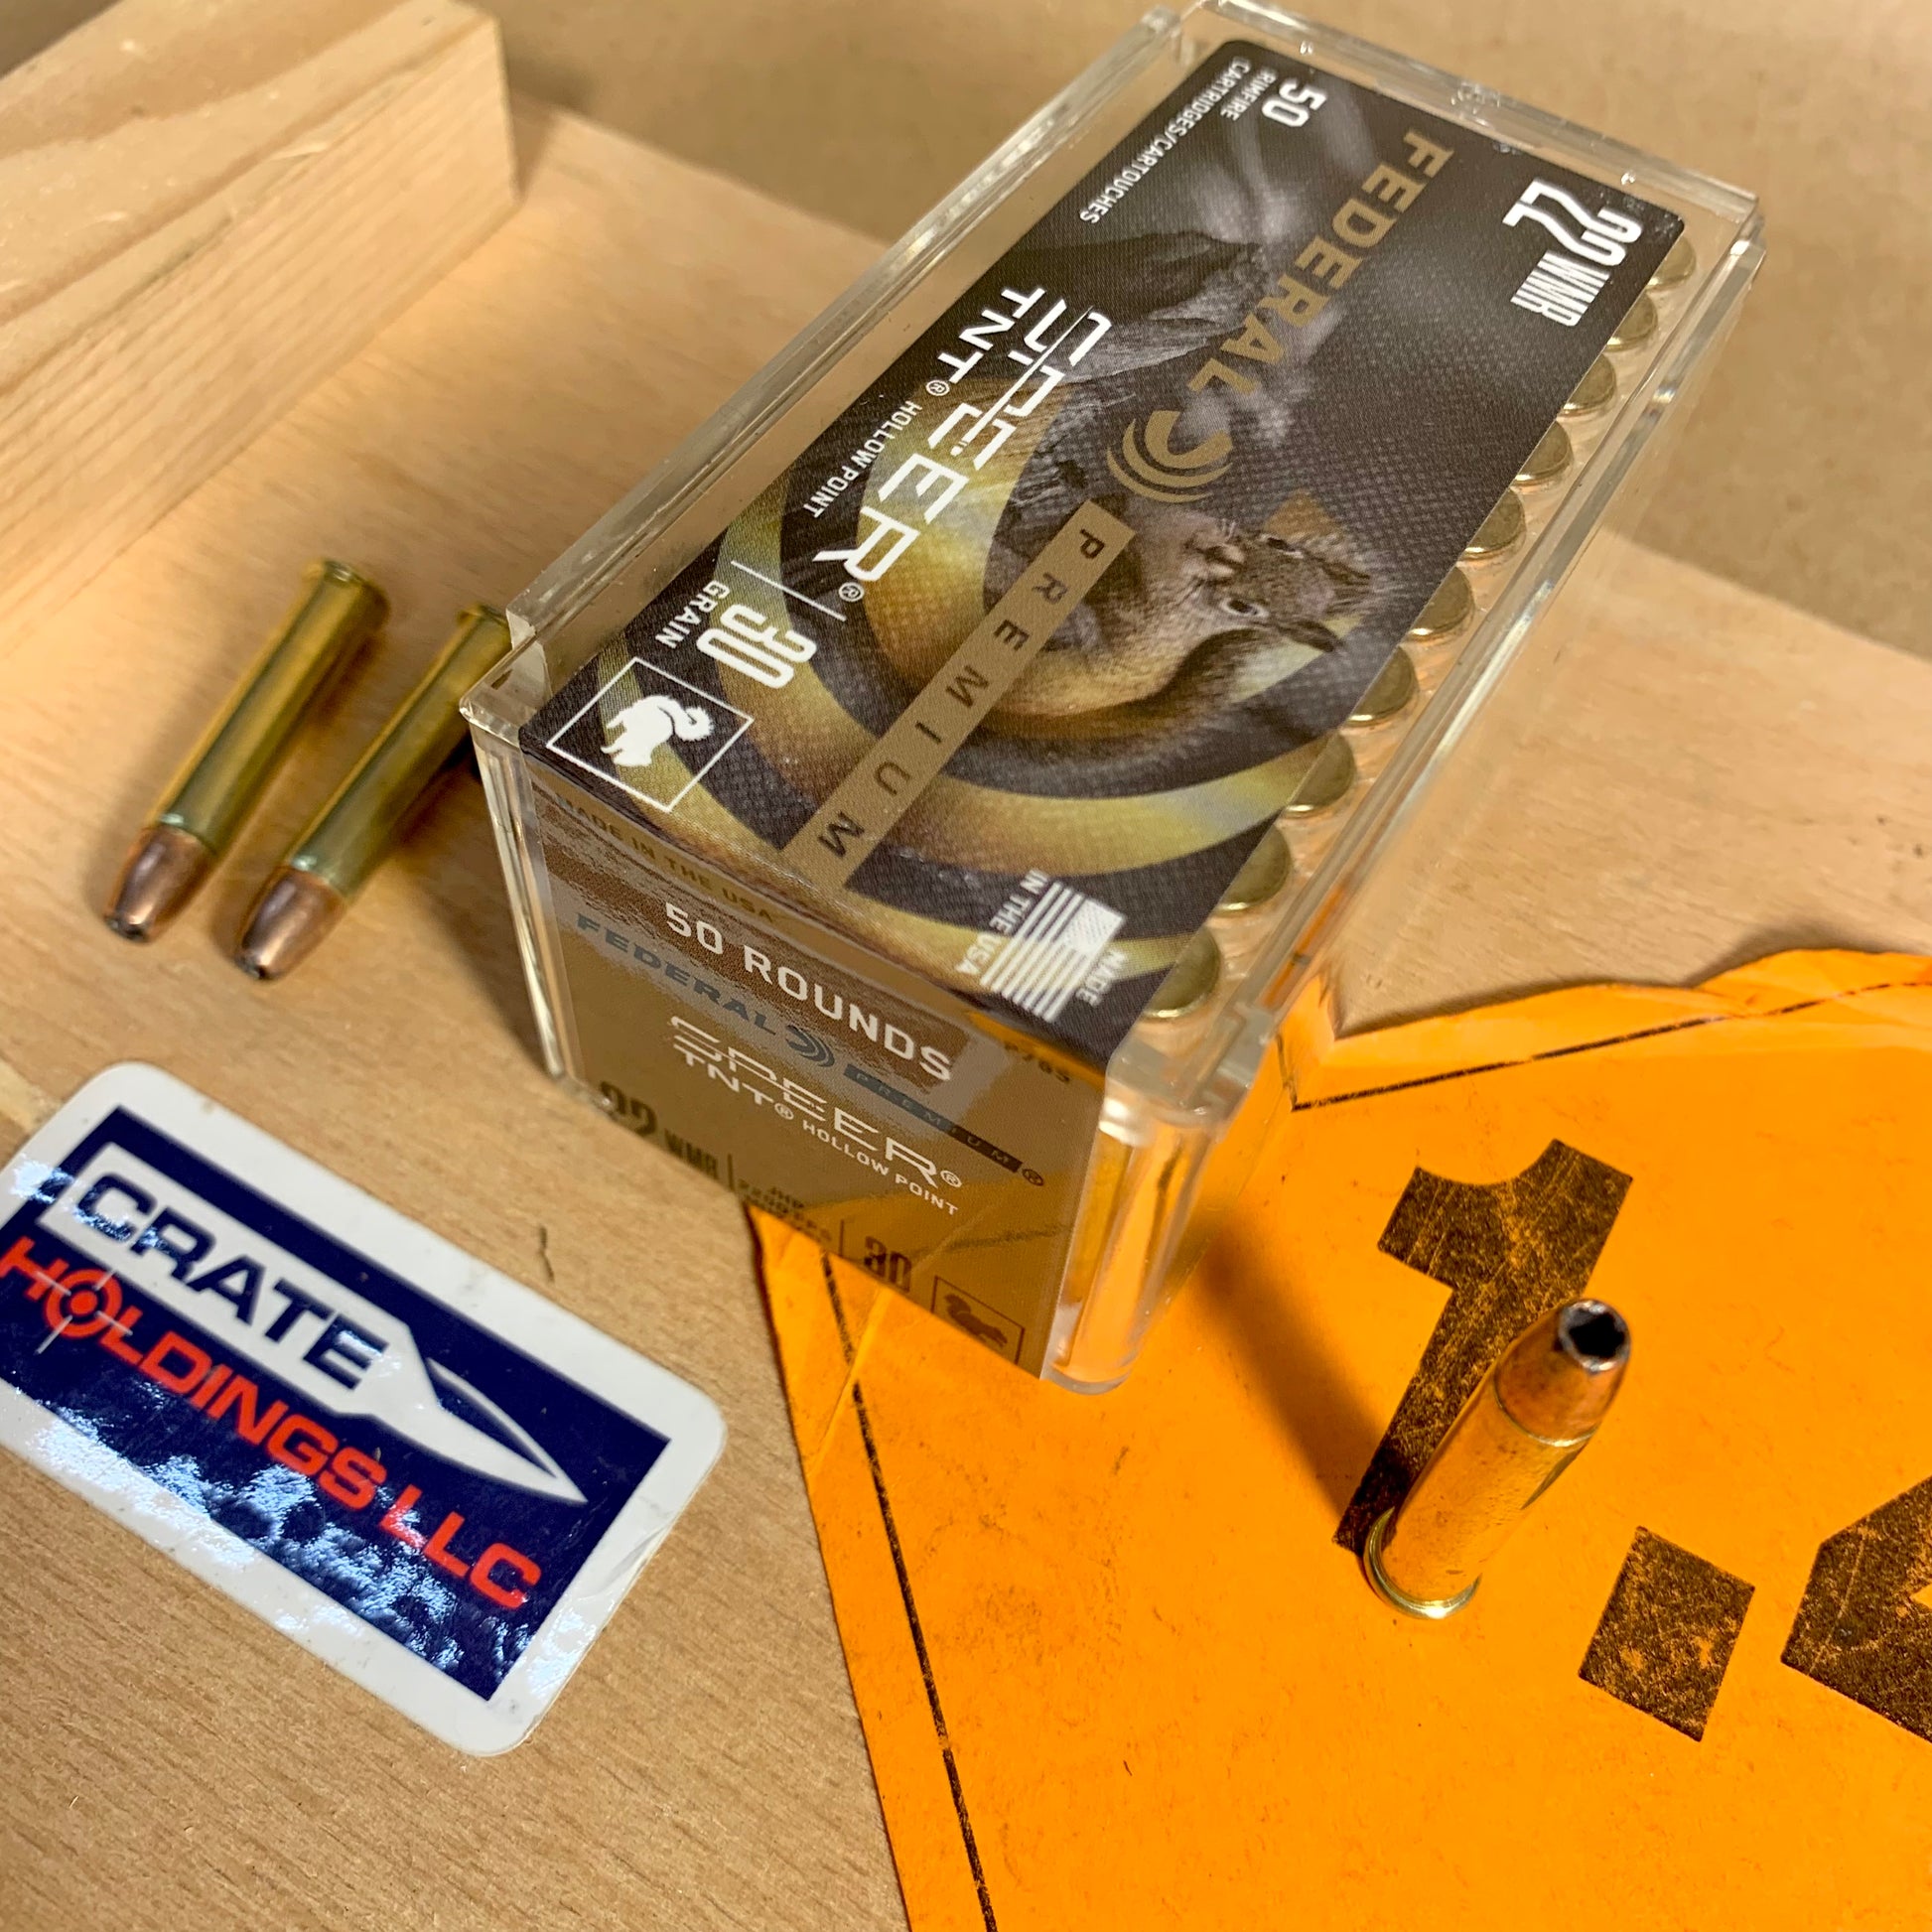 50 Count Box Federal Speer TNT .22 Mag. / WMR Ammo 30gr JHP - FDP765